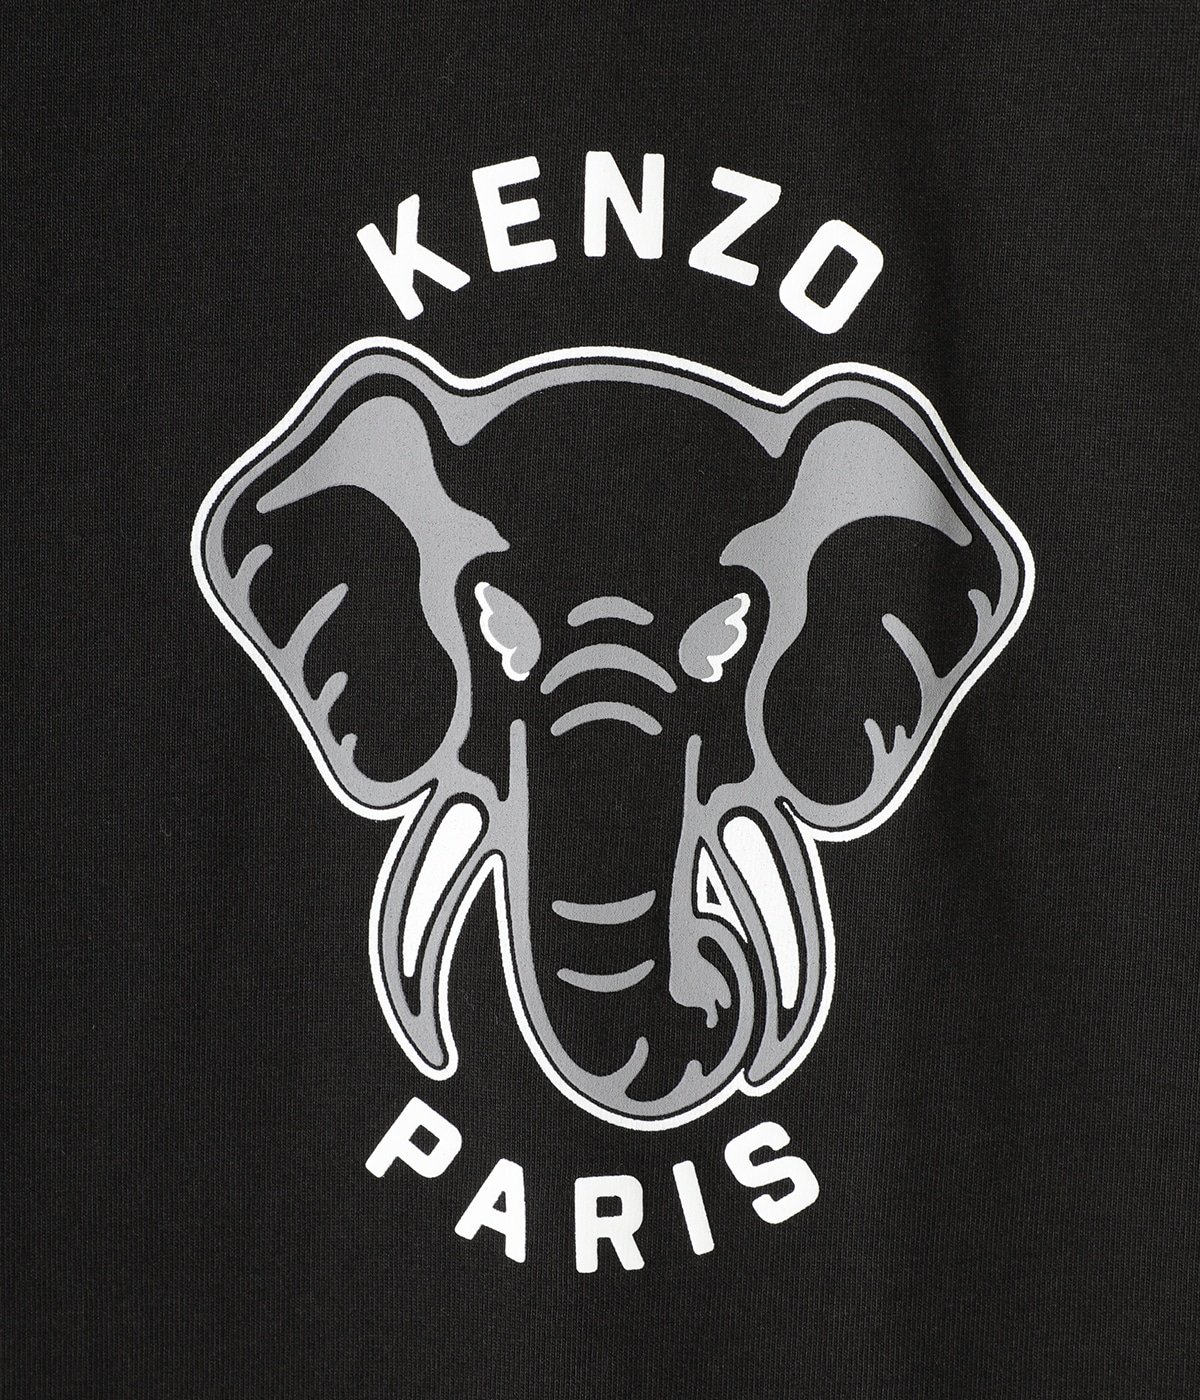 KEN ZO CLASSIC T-SHIRT | KENZO(ケンゾー) / トップス カットソー半袖 